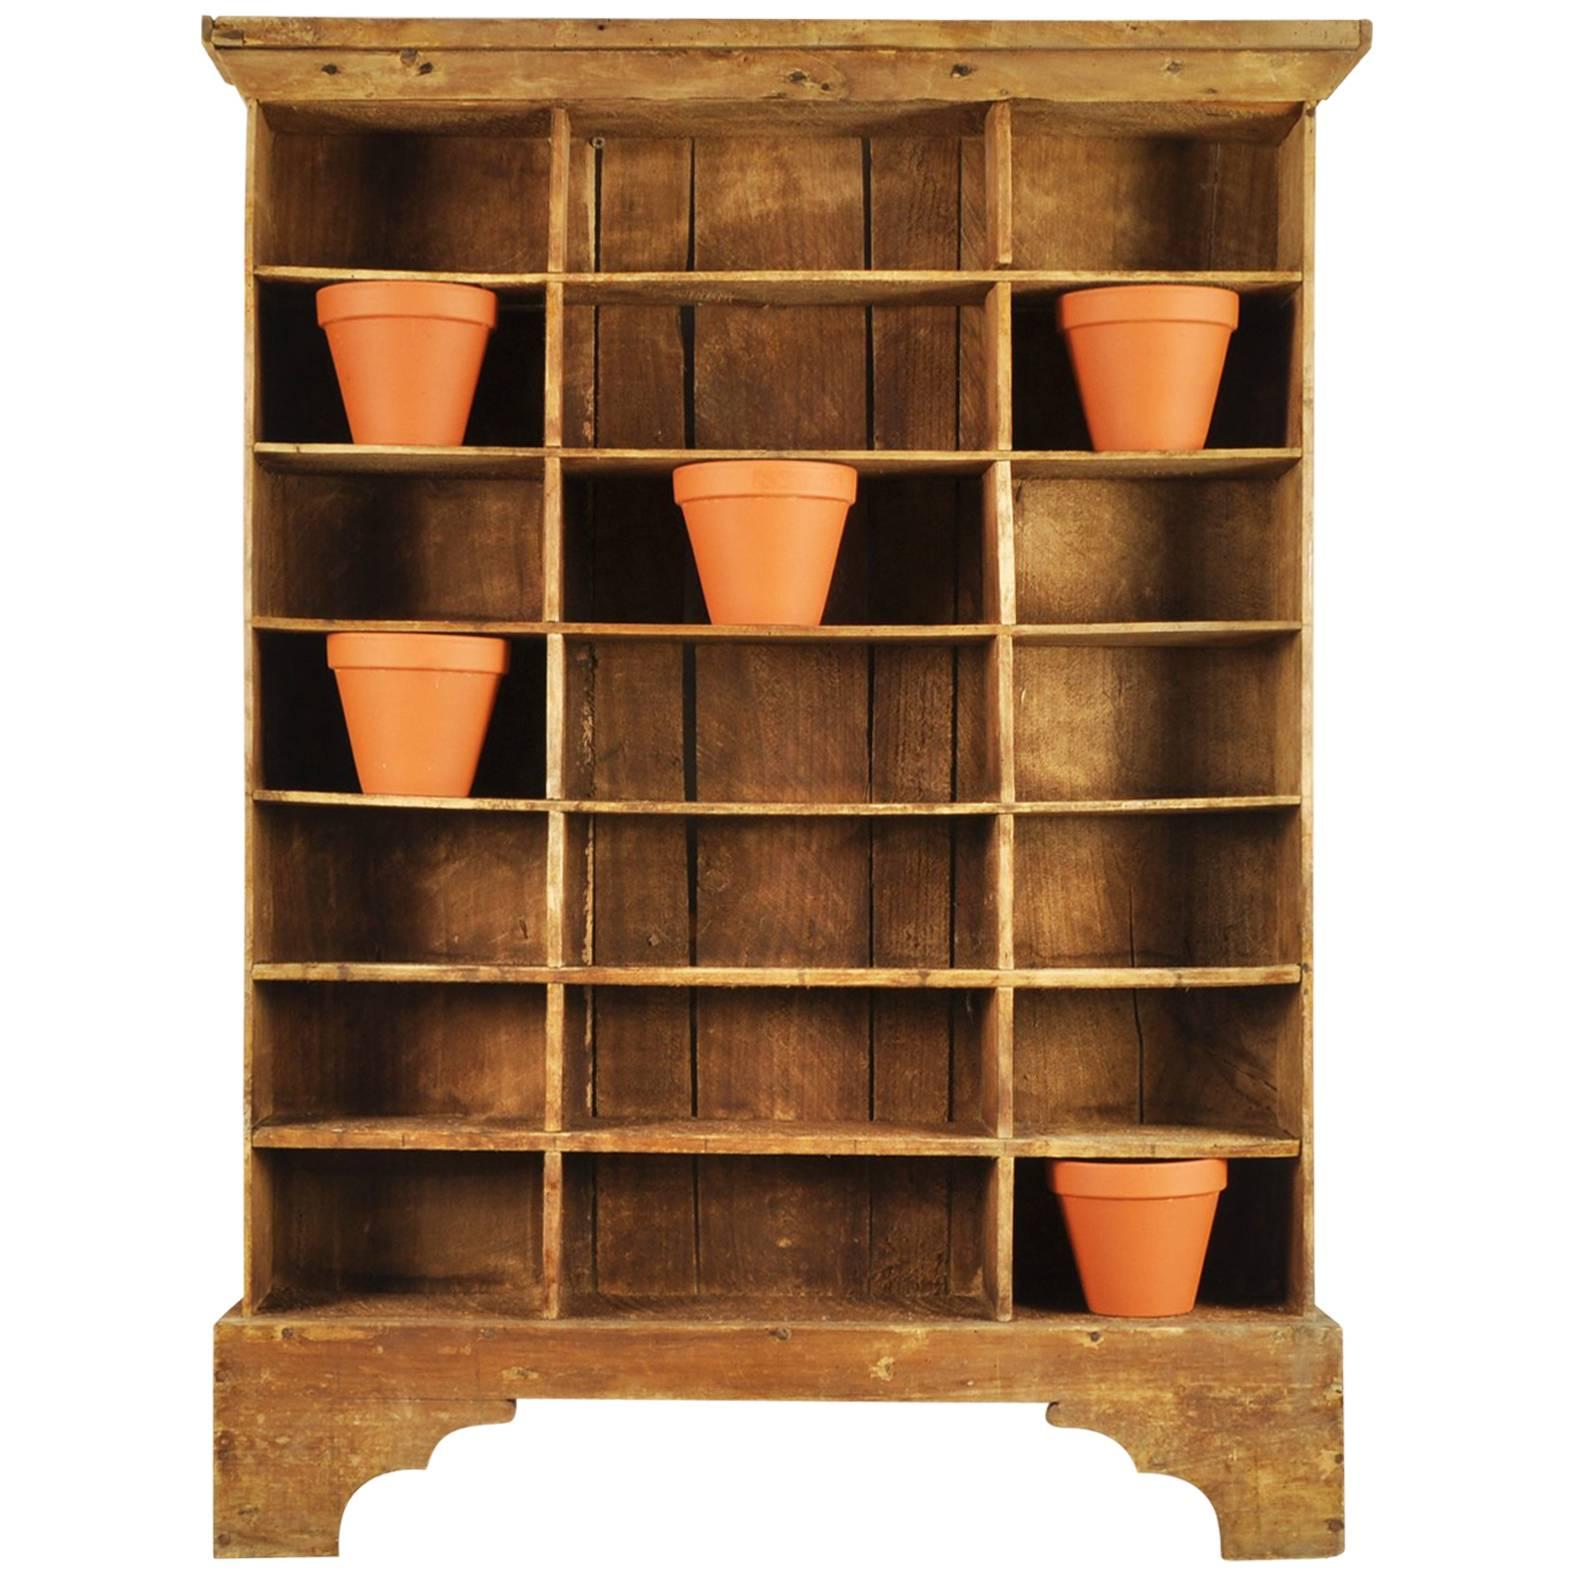 French Vintage Wooden Display Shelves For Sale